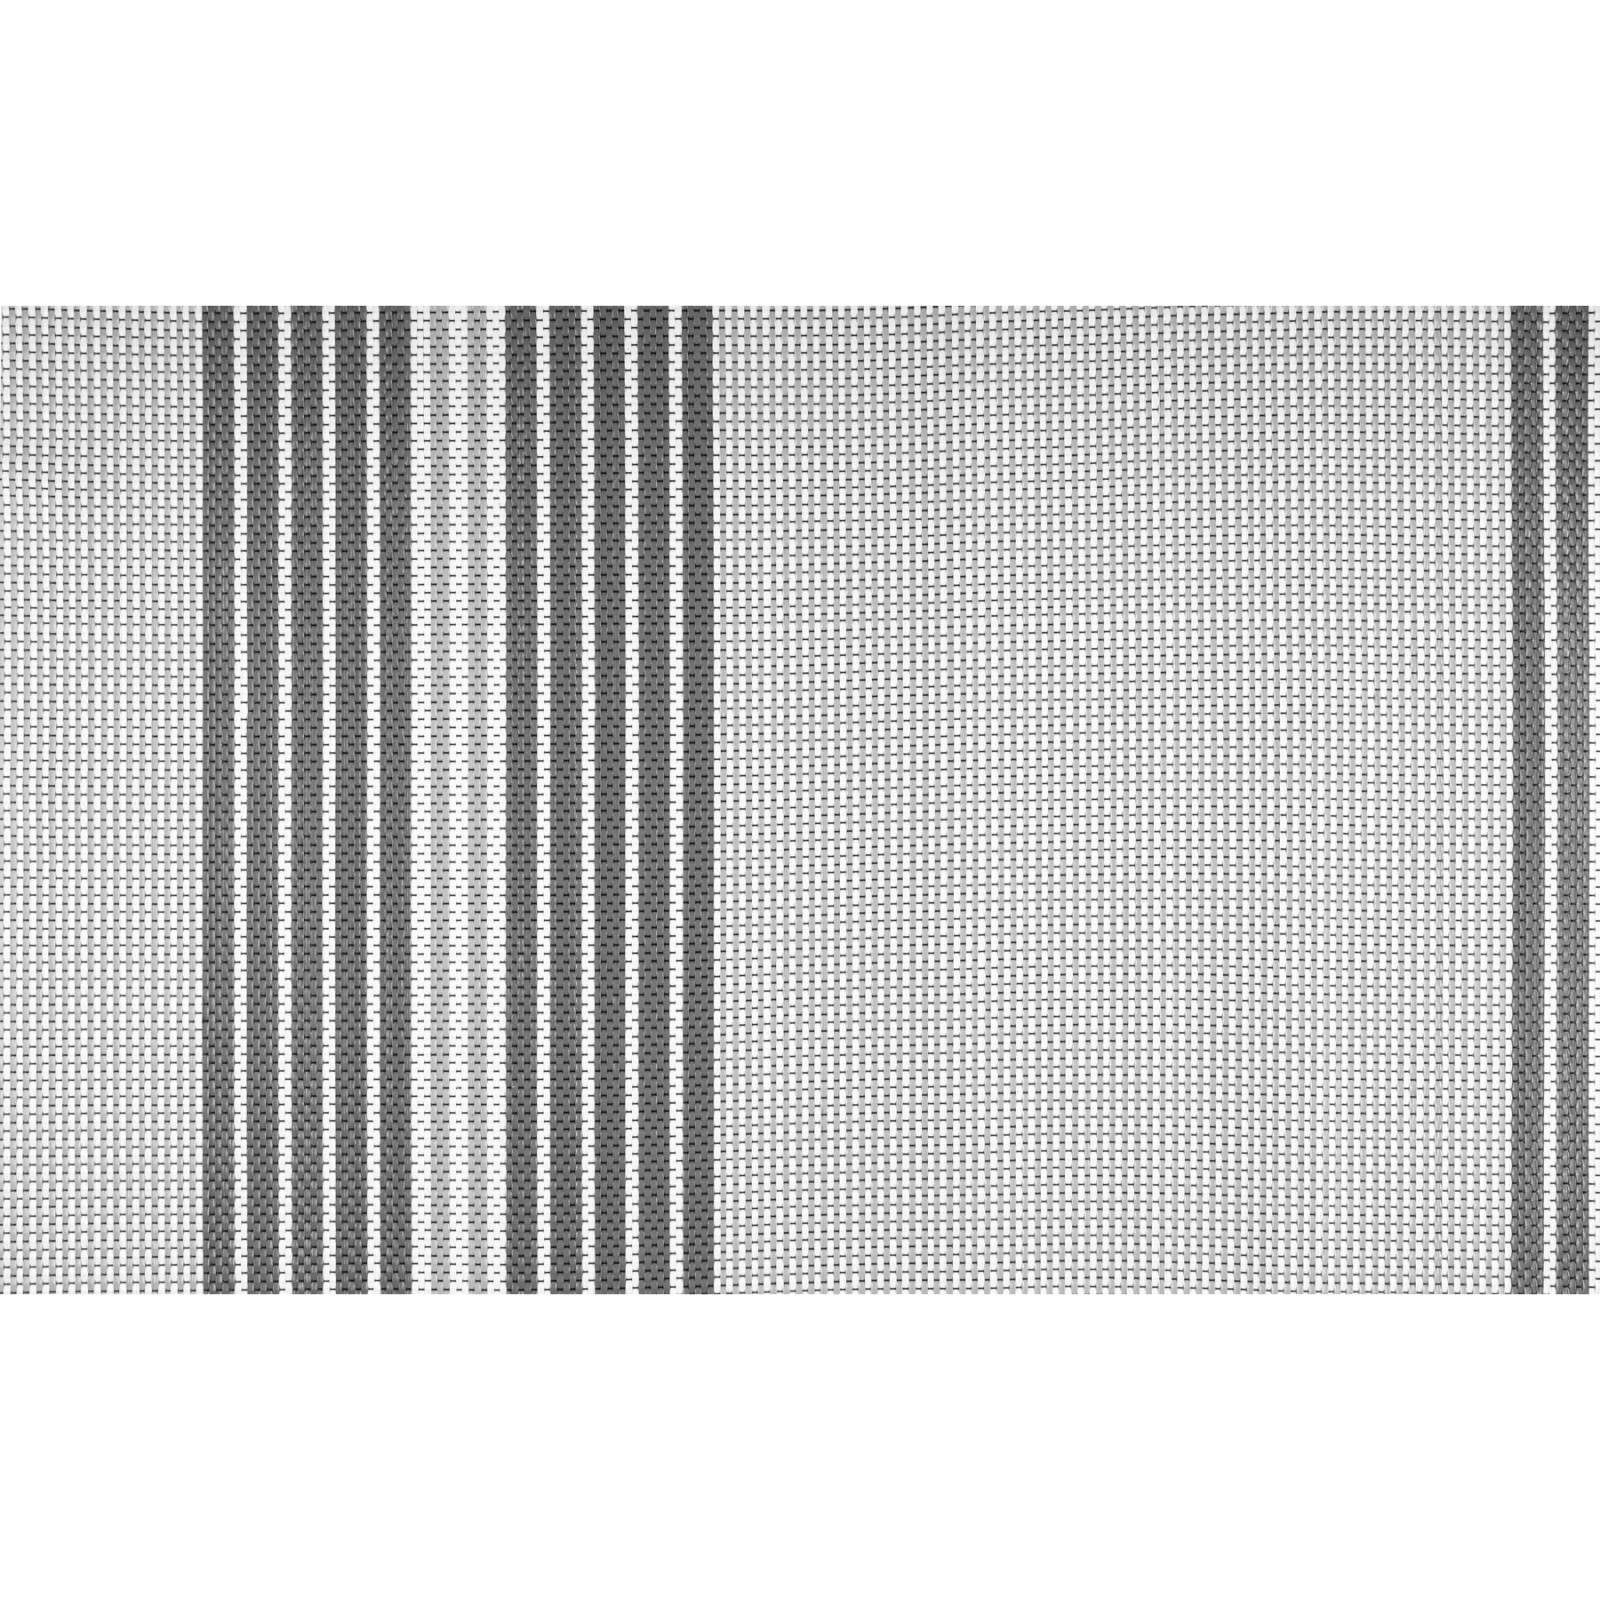 Podlážka Brunner Kinetic 600 - 250x500 cm Barva: bílá/šedá